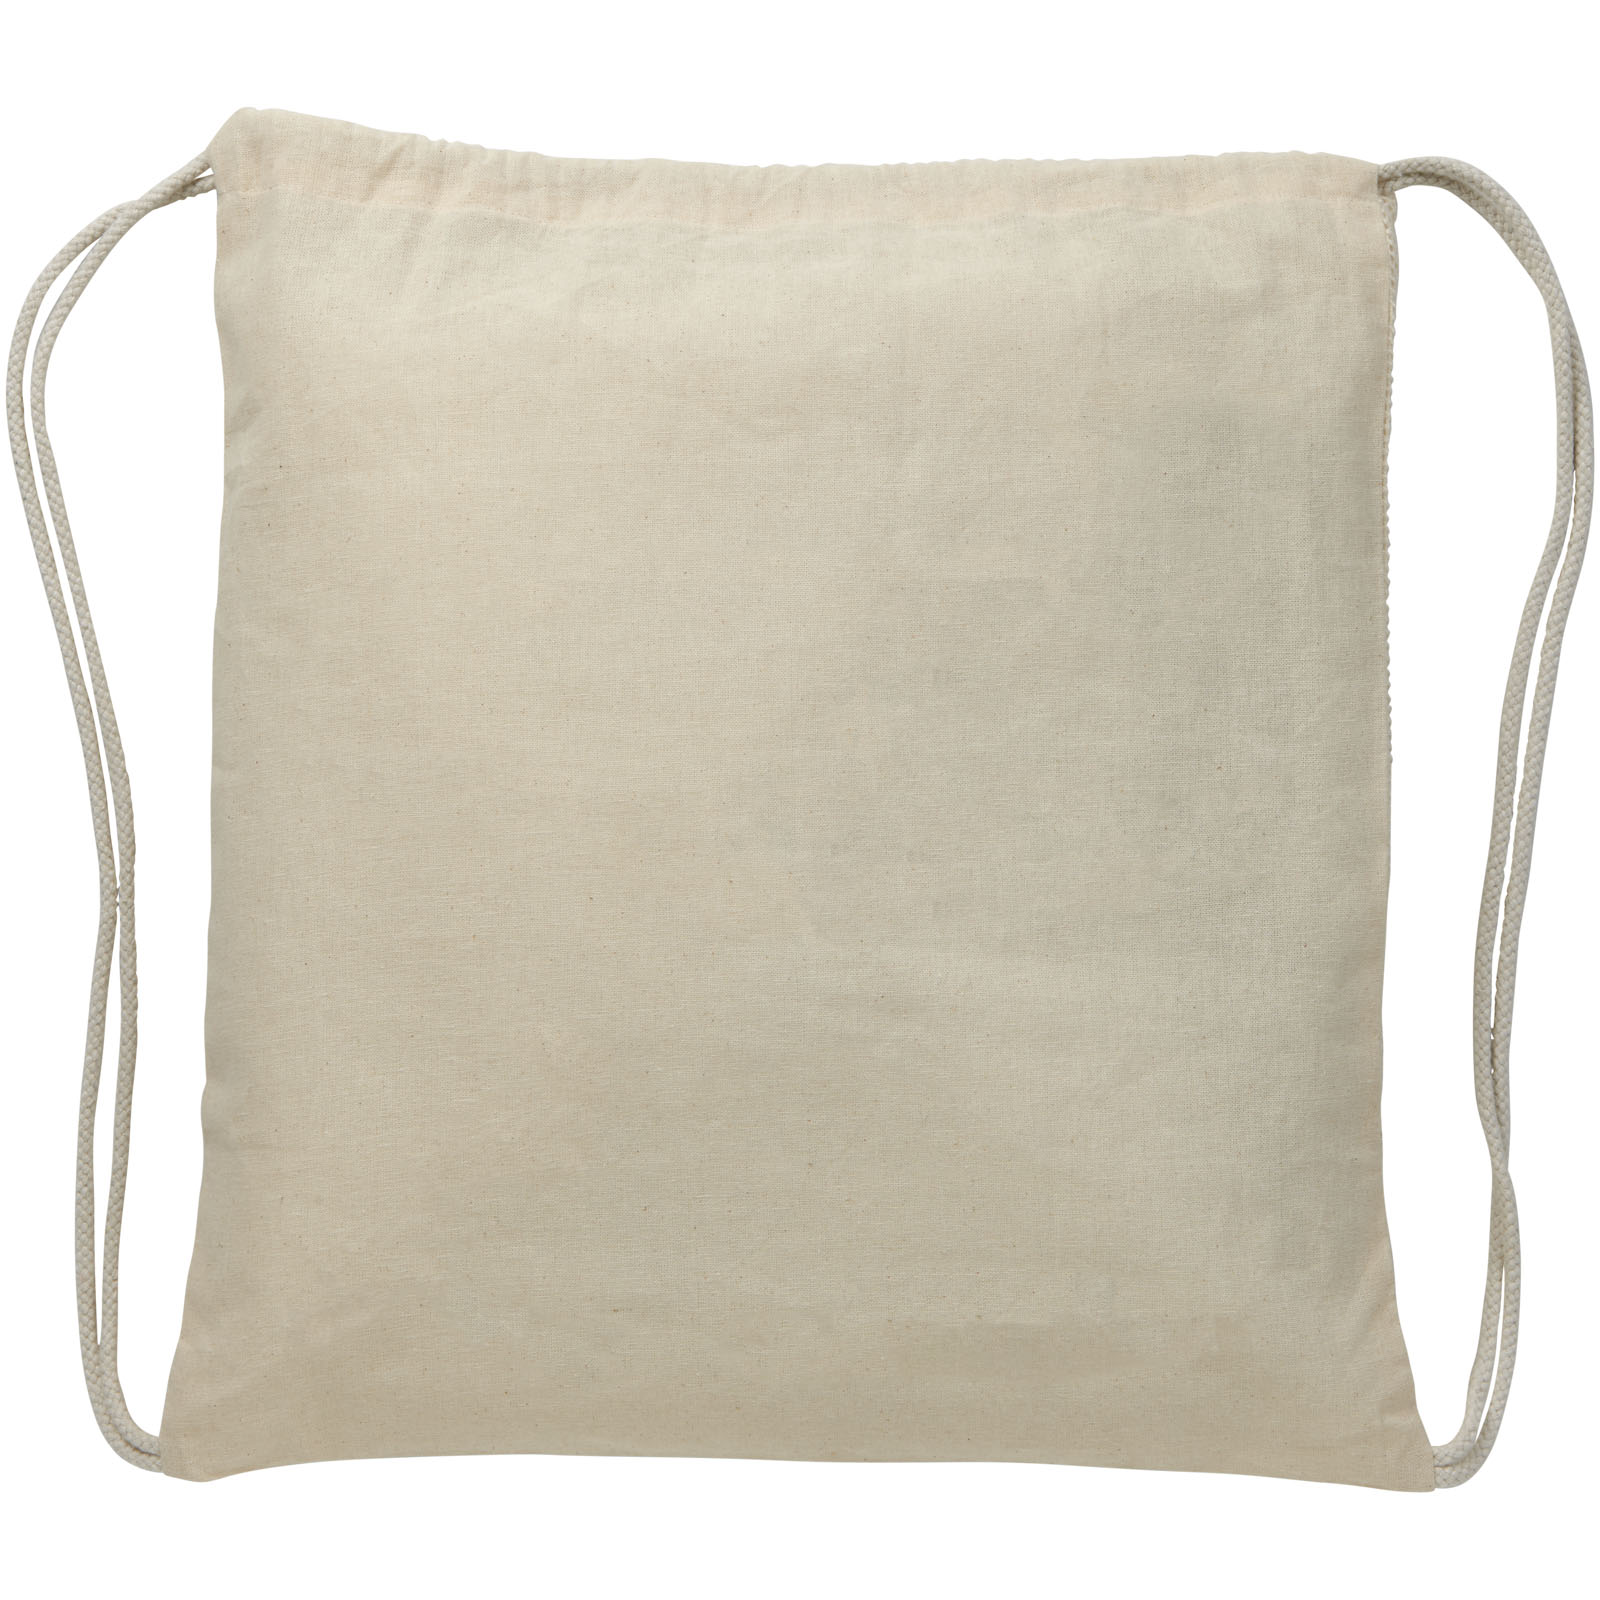 Advertising Drawstring Bags - Maine mesh cotton drawstring bag 5L - 1